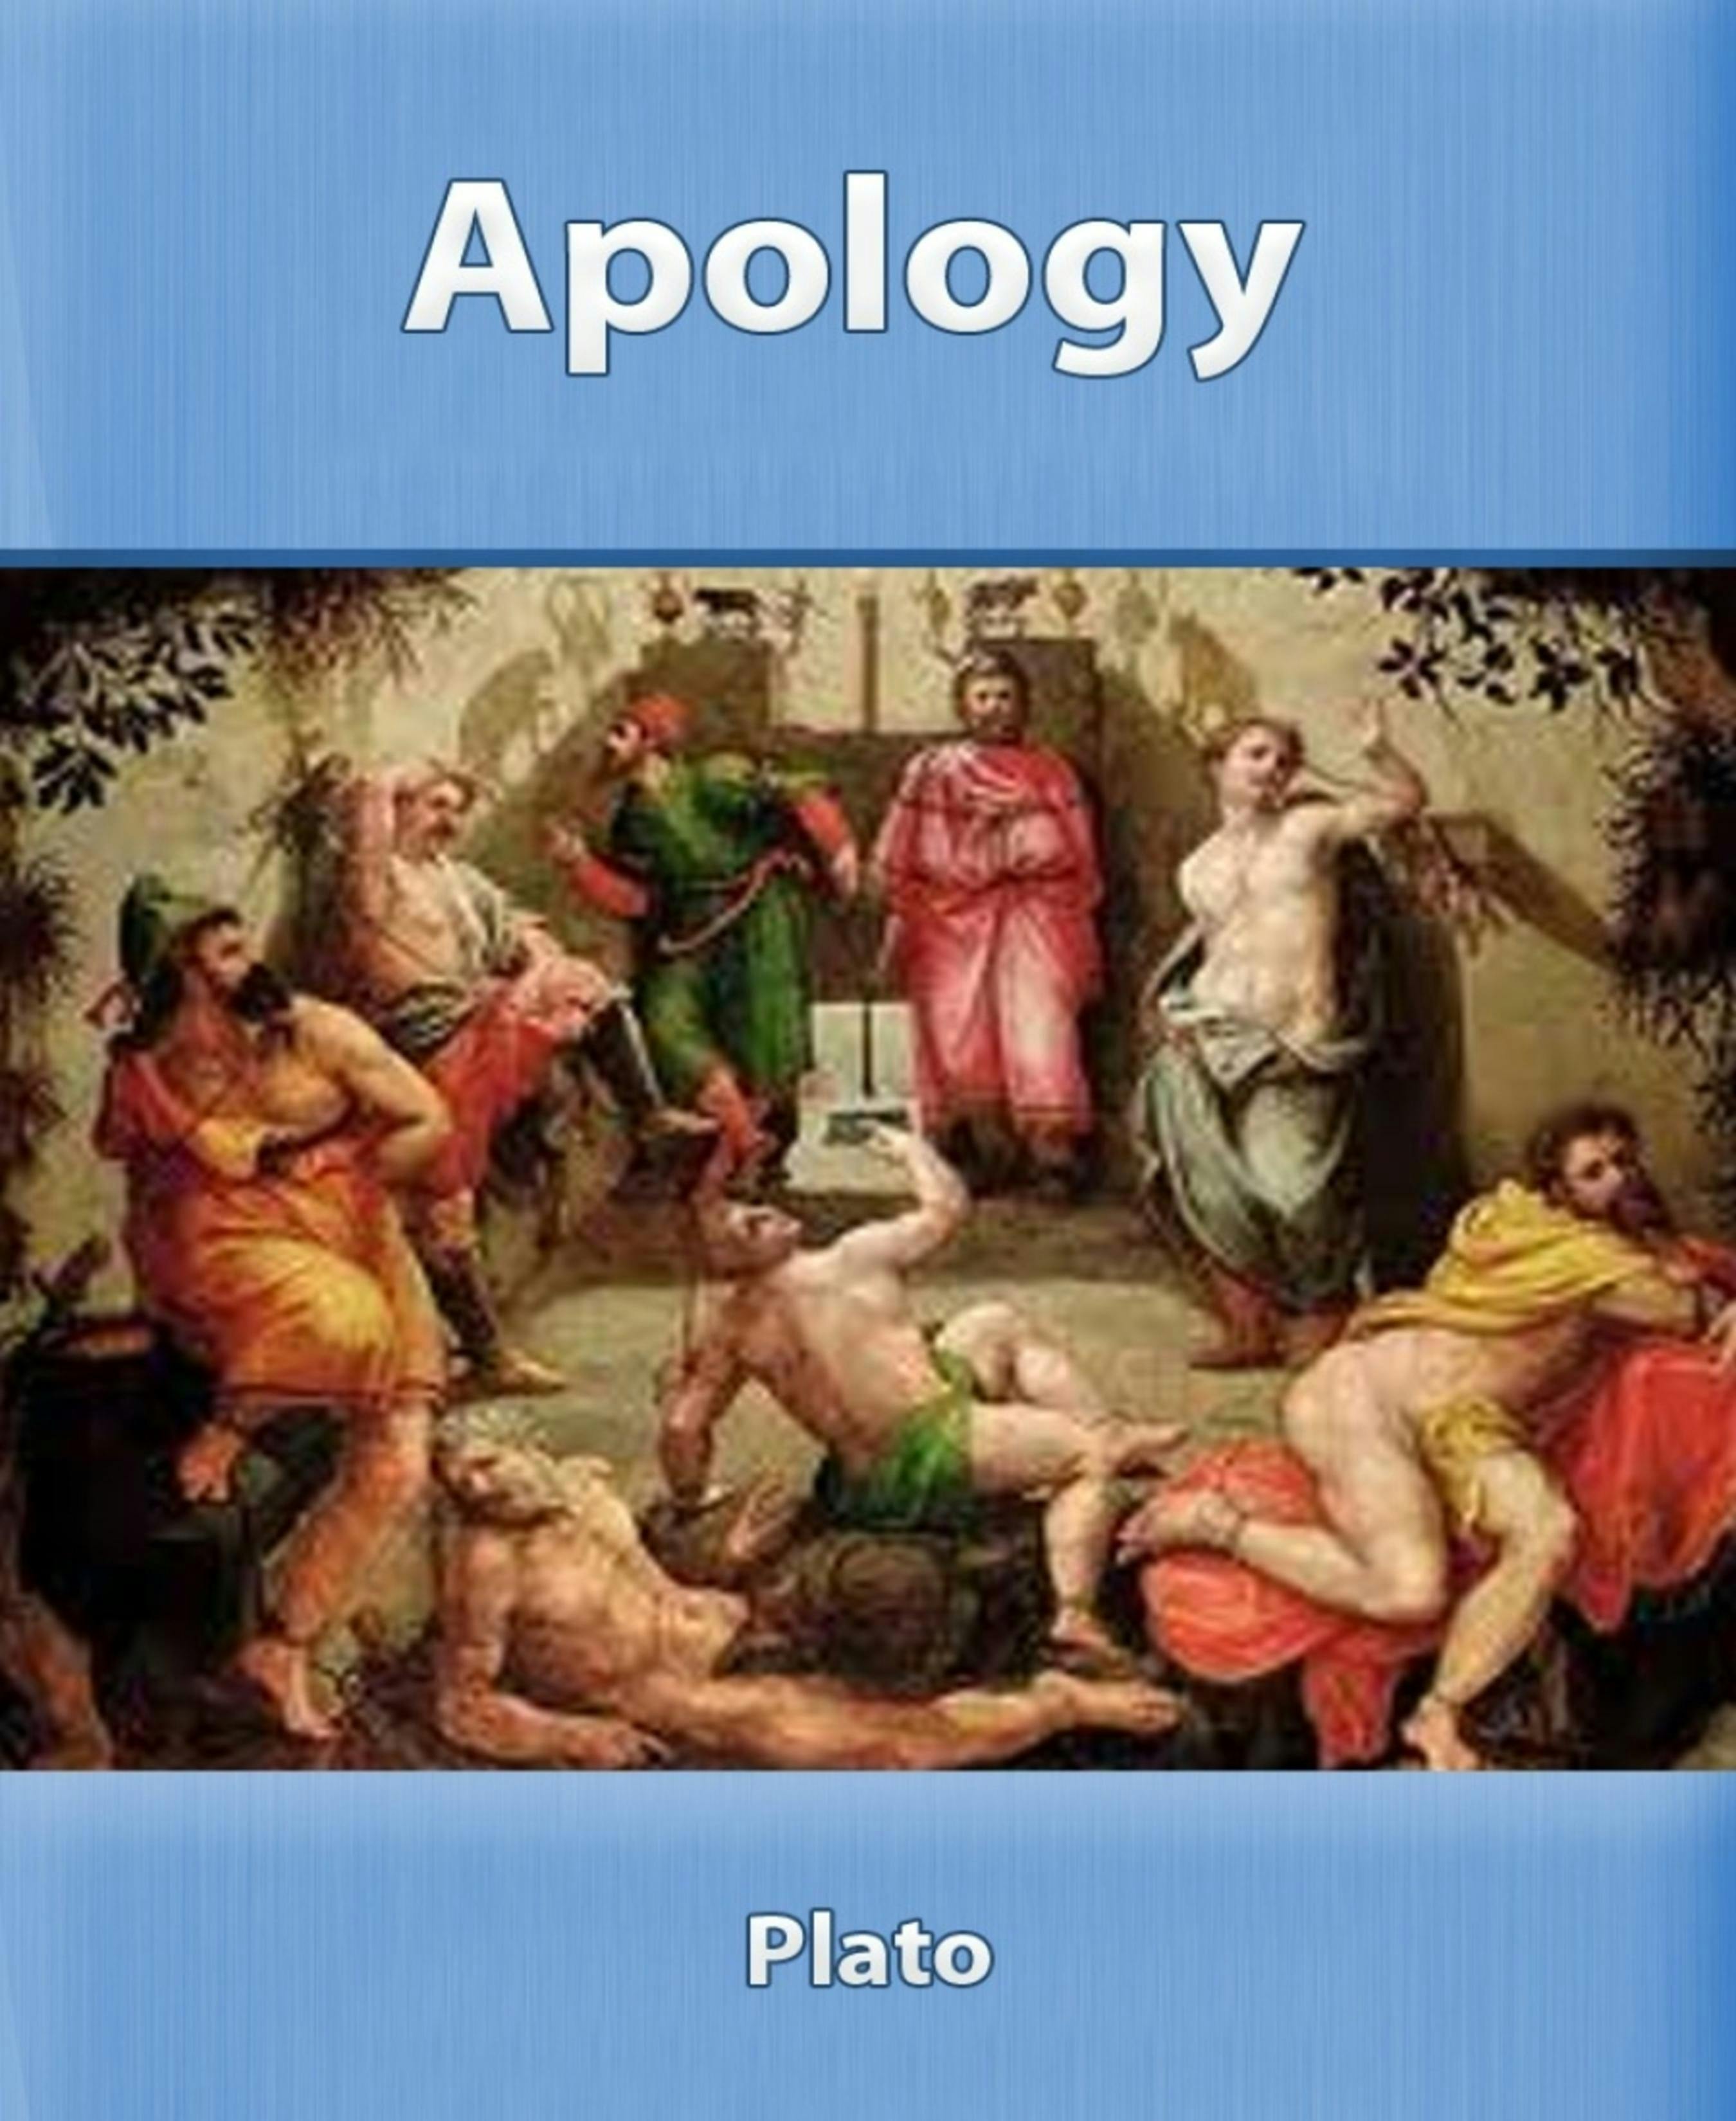 Apology - undefined